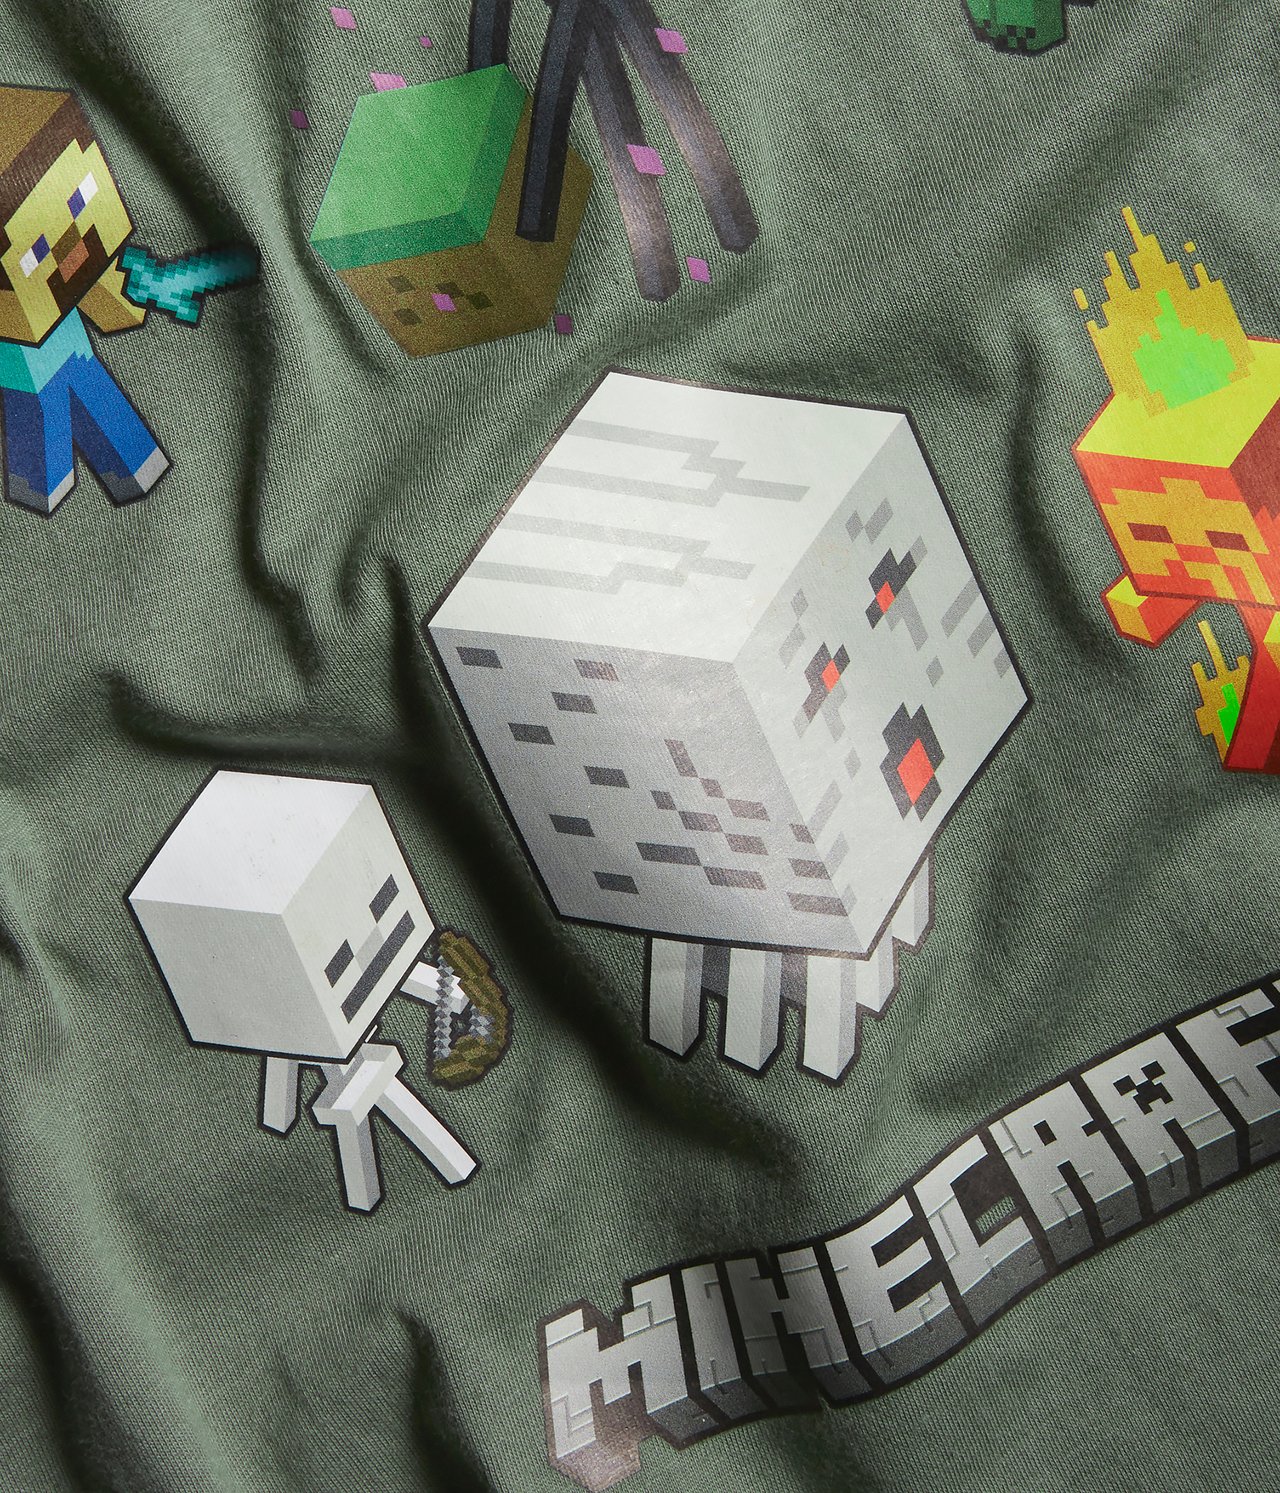 T-skjorte Minecraft - Grønn - 1